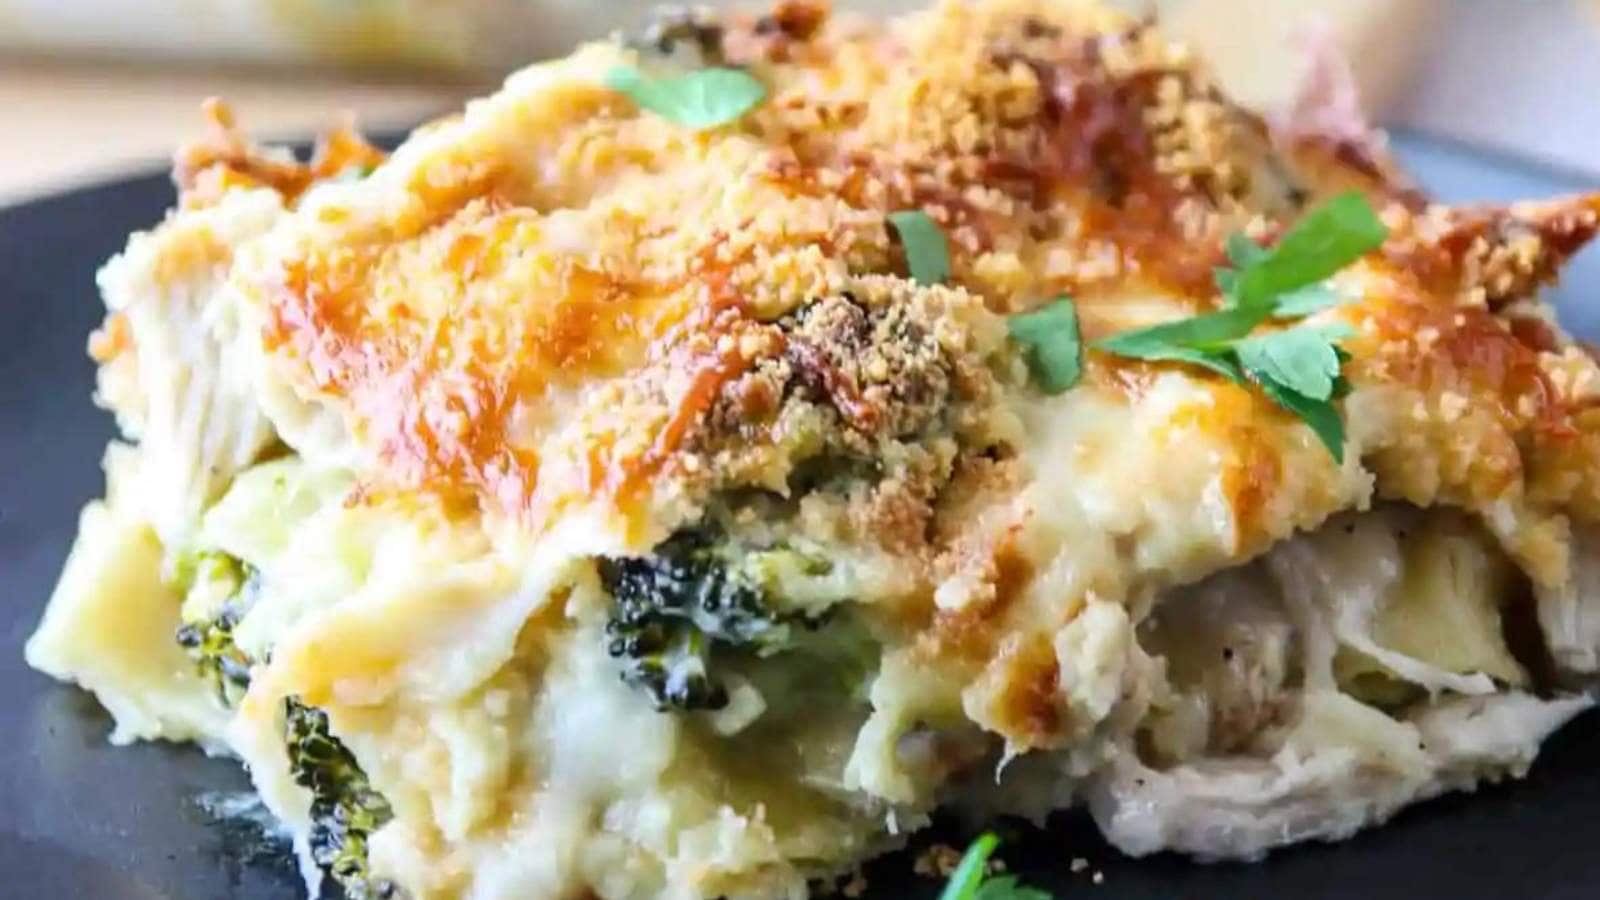 Chicken and Broccoli Lasagna recipe by The Food Blog.